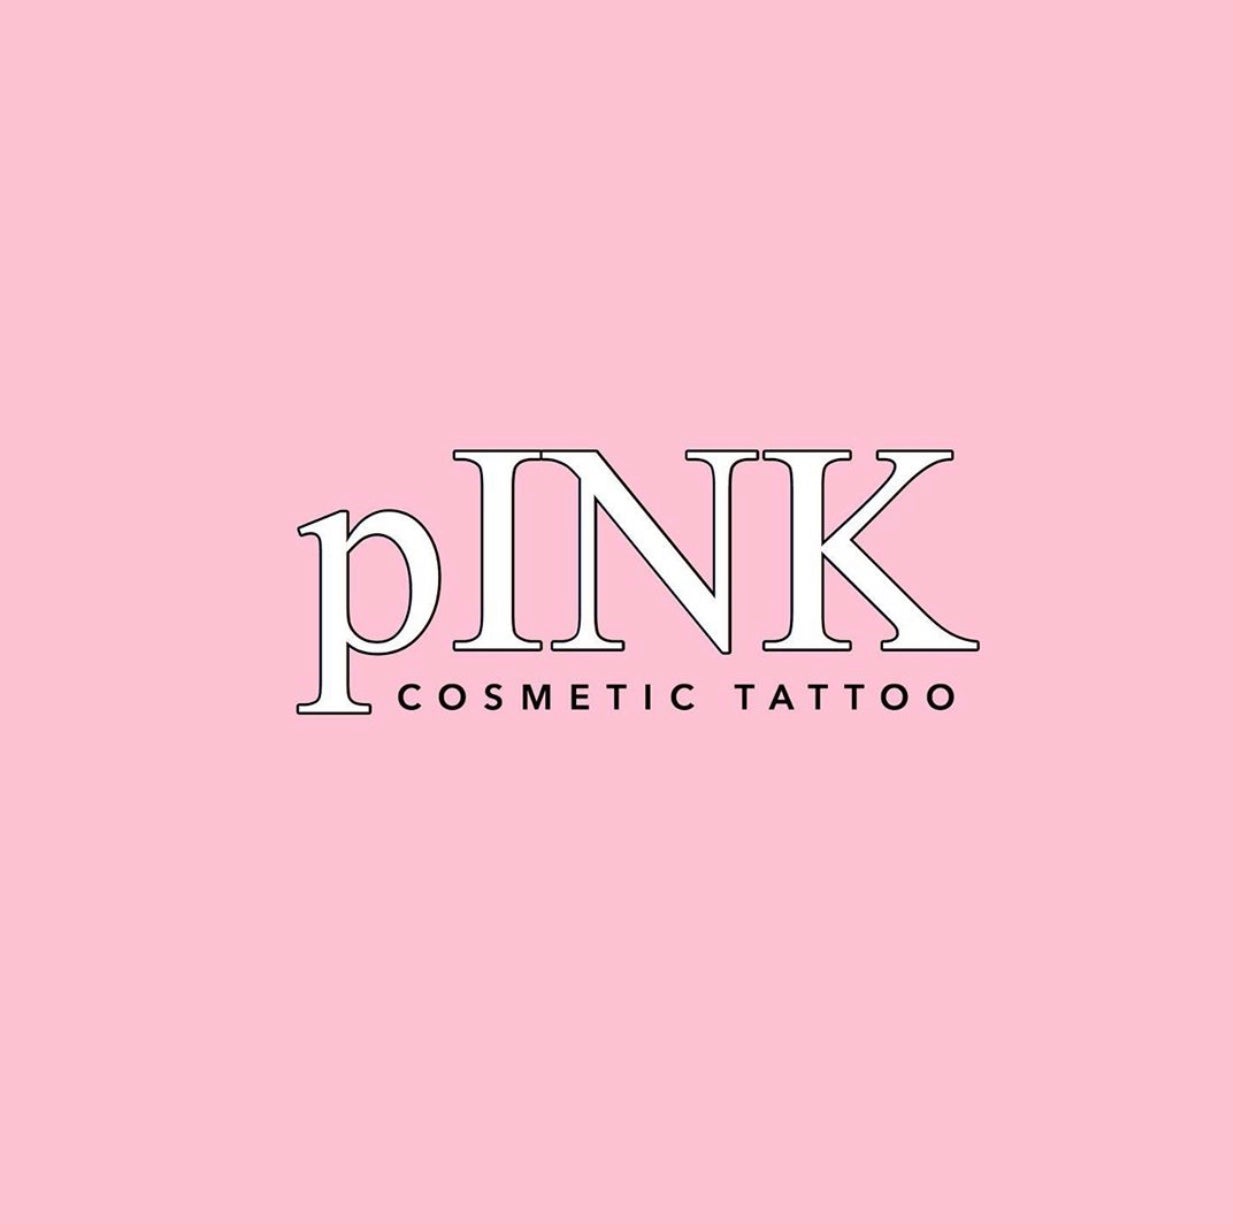 pINK cosmetic tattoo logo